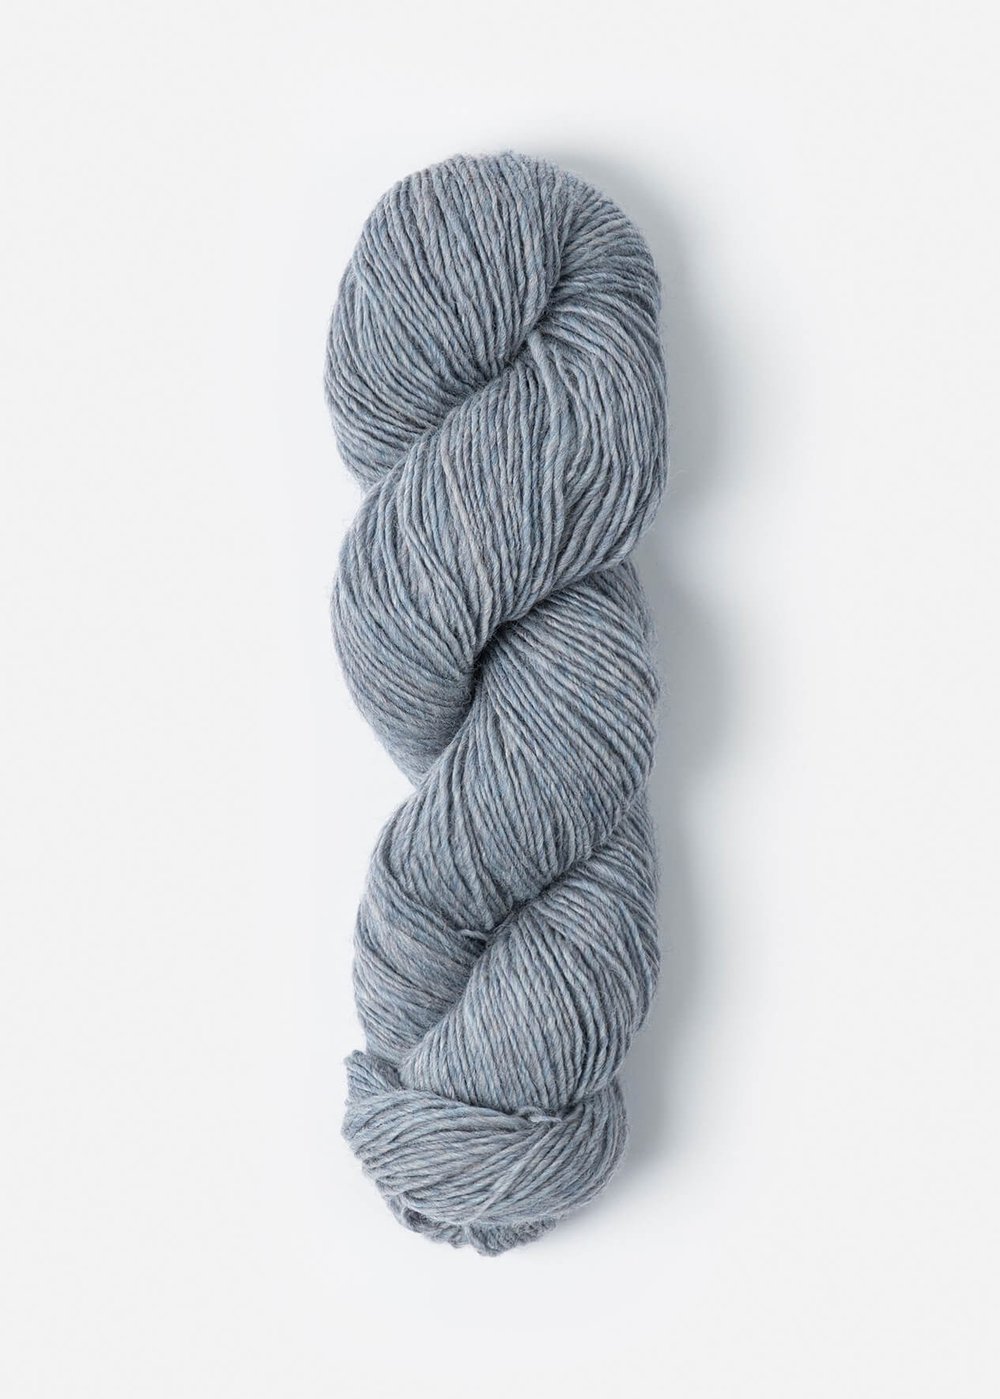 Woolstok Light - Blue Sky Fibers — Starlight Knitting Society